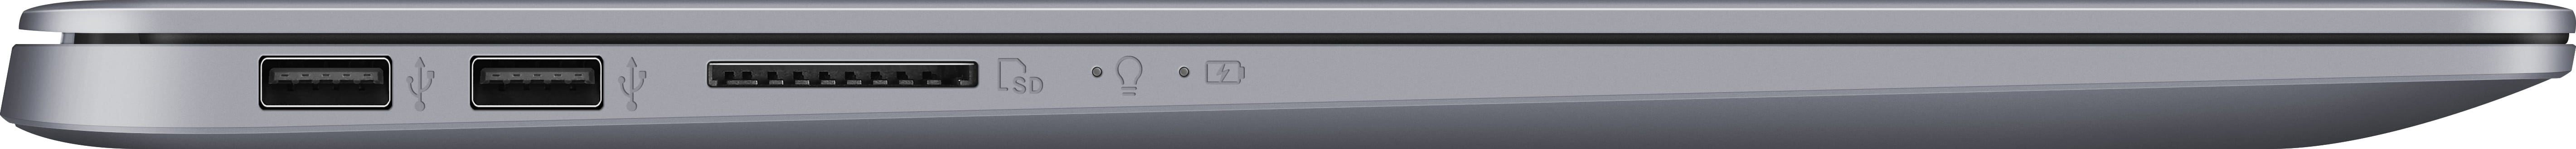 Laptop ASUS S510UA / 15.6" Full HD / i3-7100U / 4GB DDR4 / 256Gb M.2 / Intel HD Graphics / Fingerprint / Endless OS /